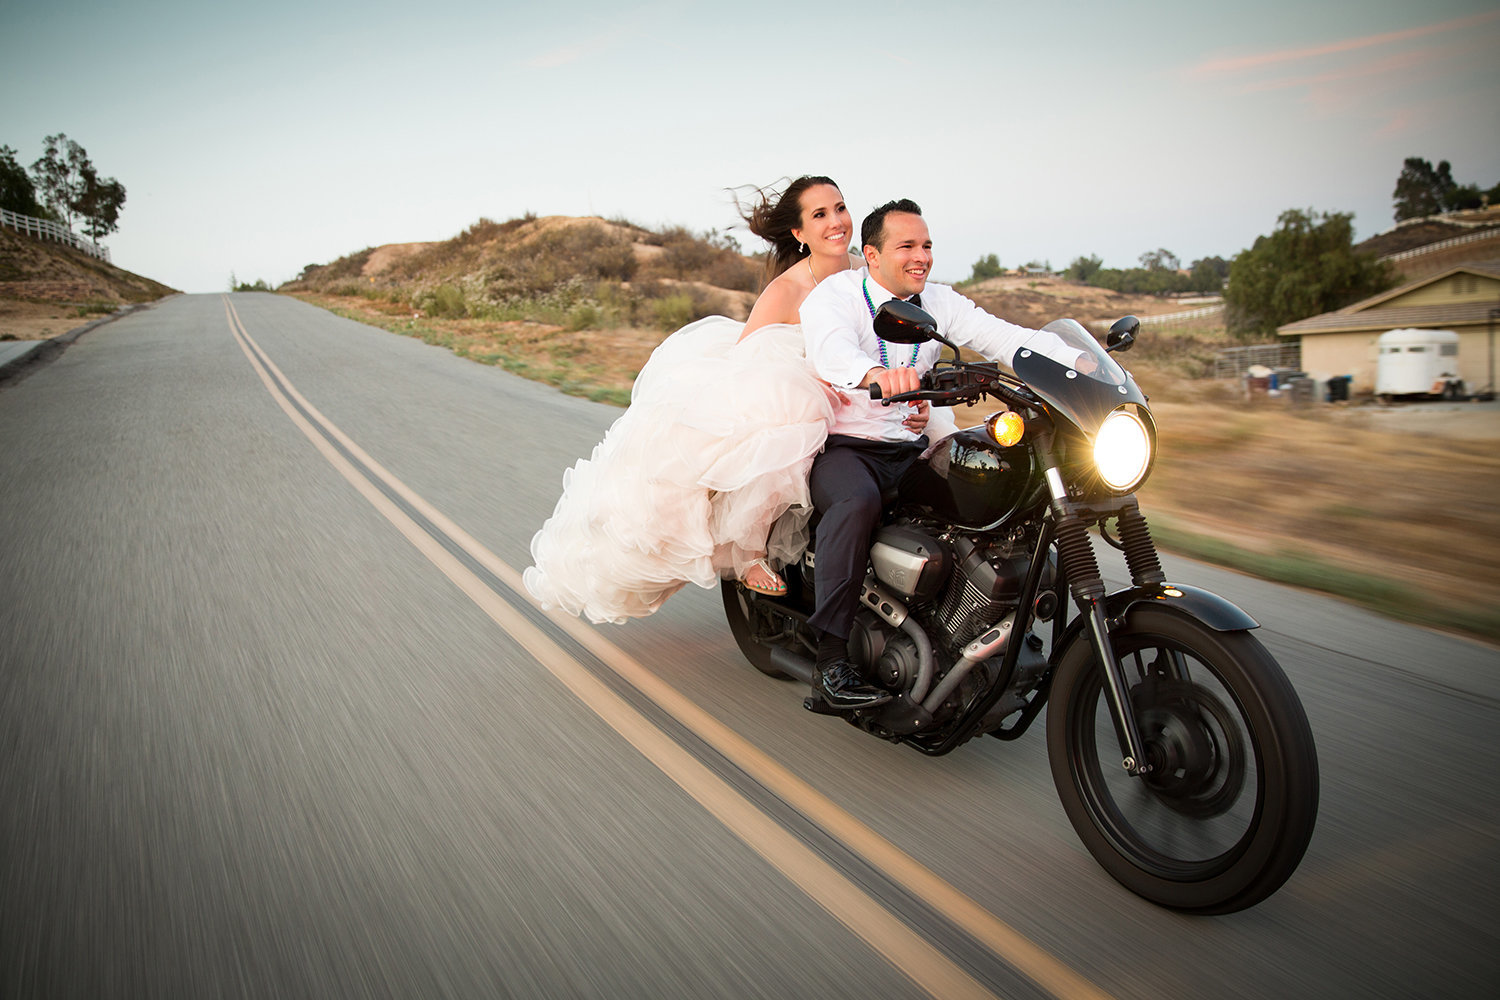 Temecula wedding photos motorcycle driving fun